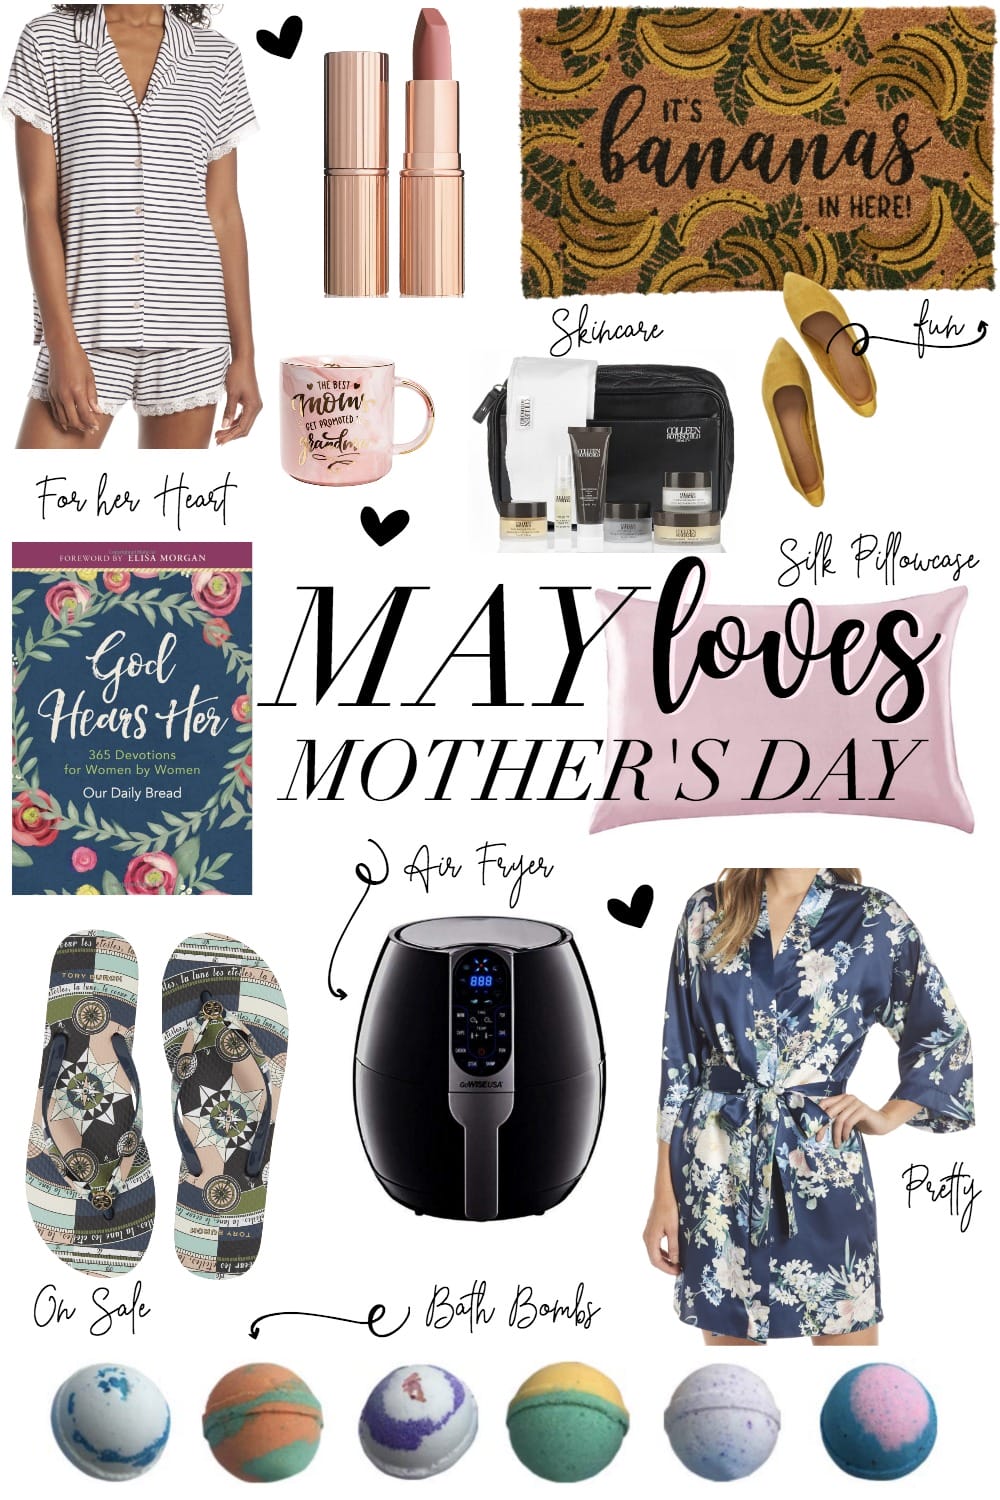 https://eb2pgoq5kpf.exactdn.com/wp-content/uploads/2019/05/May-Loves-Mothers-Day-Gift-Ideas.jpg?strip=all&lossy=1&w=2560&ssl=1